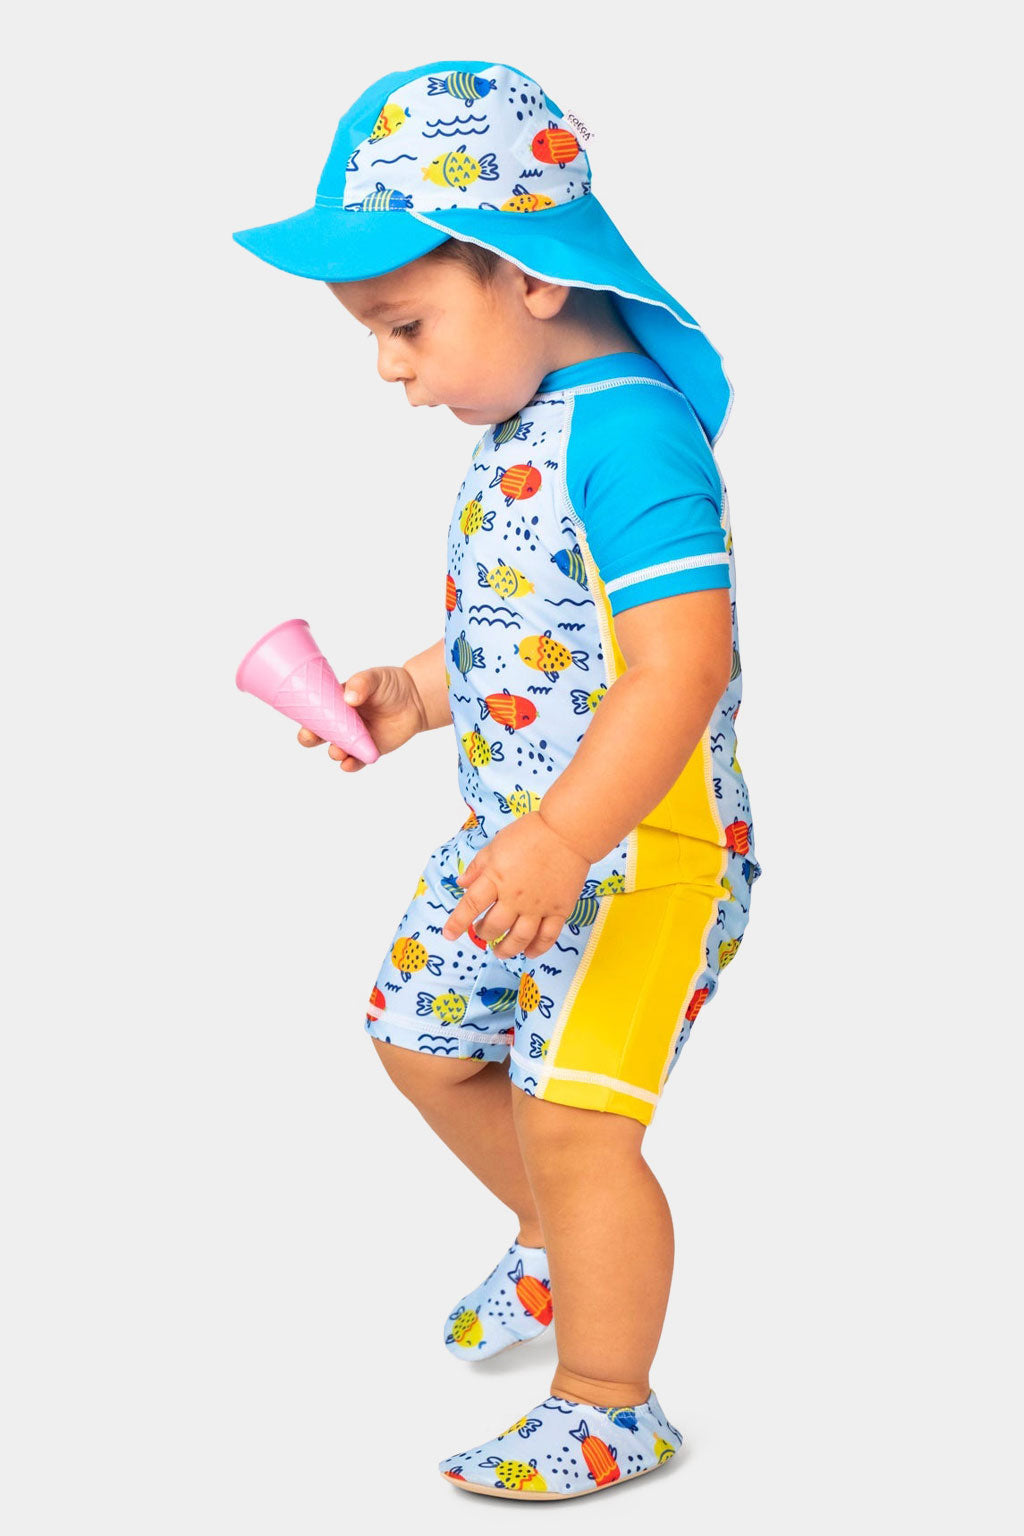 Coega - Boys Baby Swim Suit One Piece